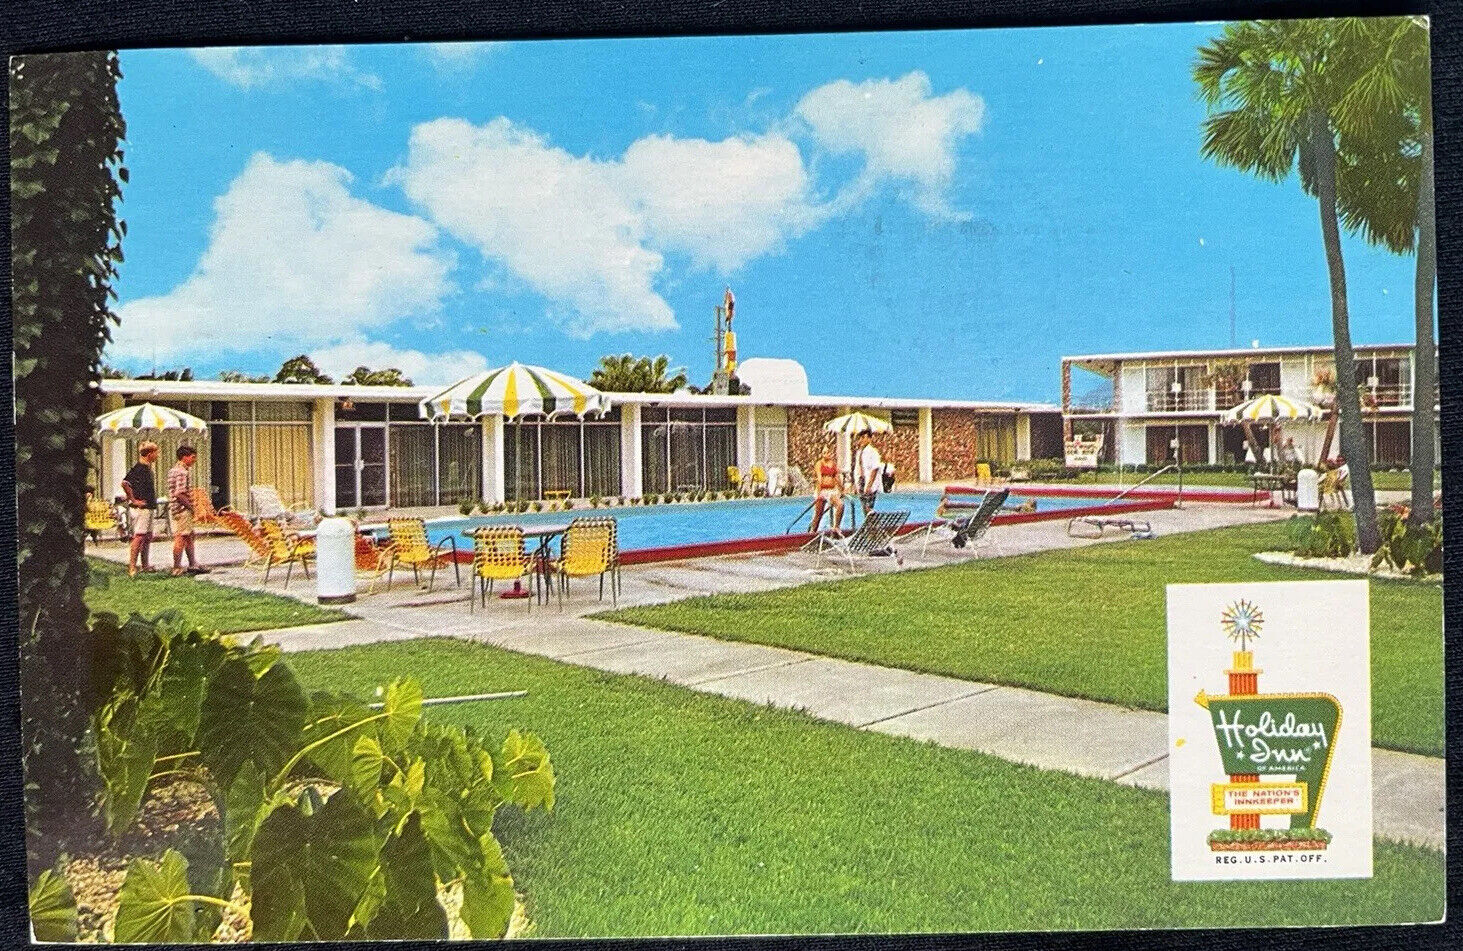 Tallahassee Florida Holiday Inn Motel Hotel Swimming Pool Postcard c1960